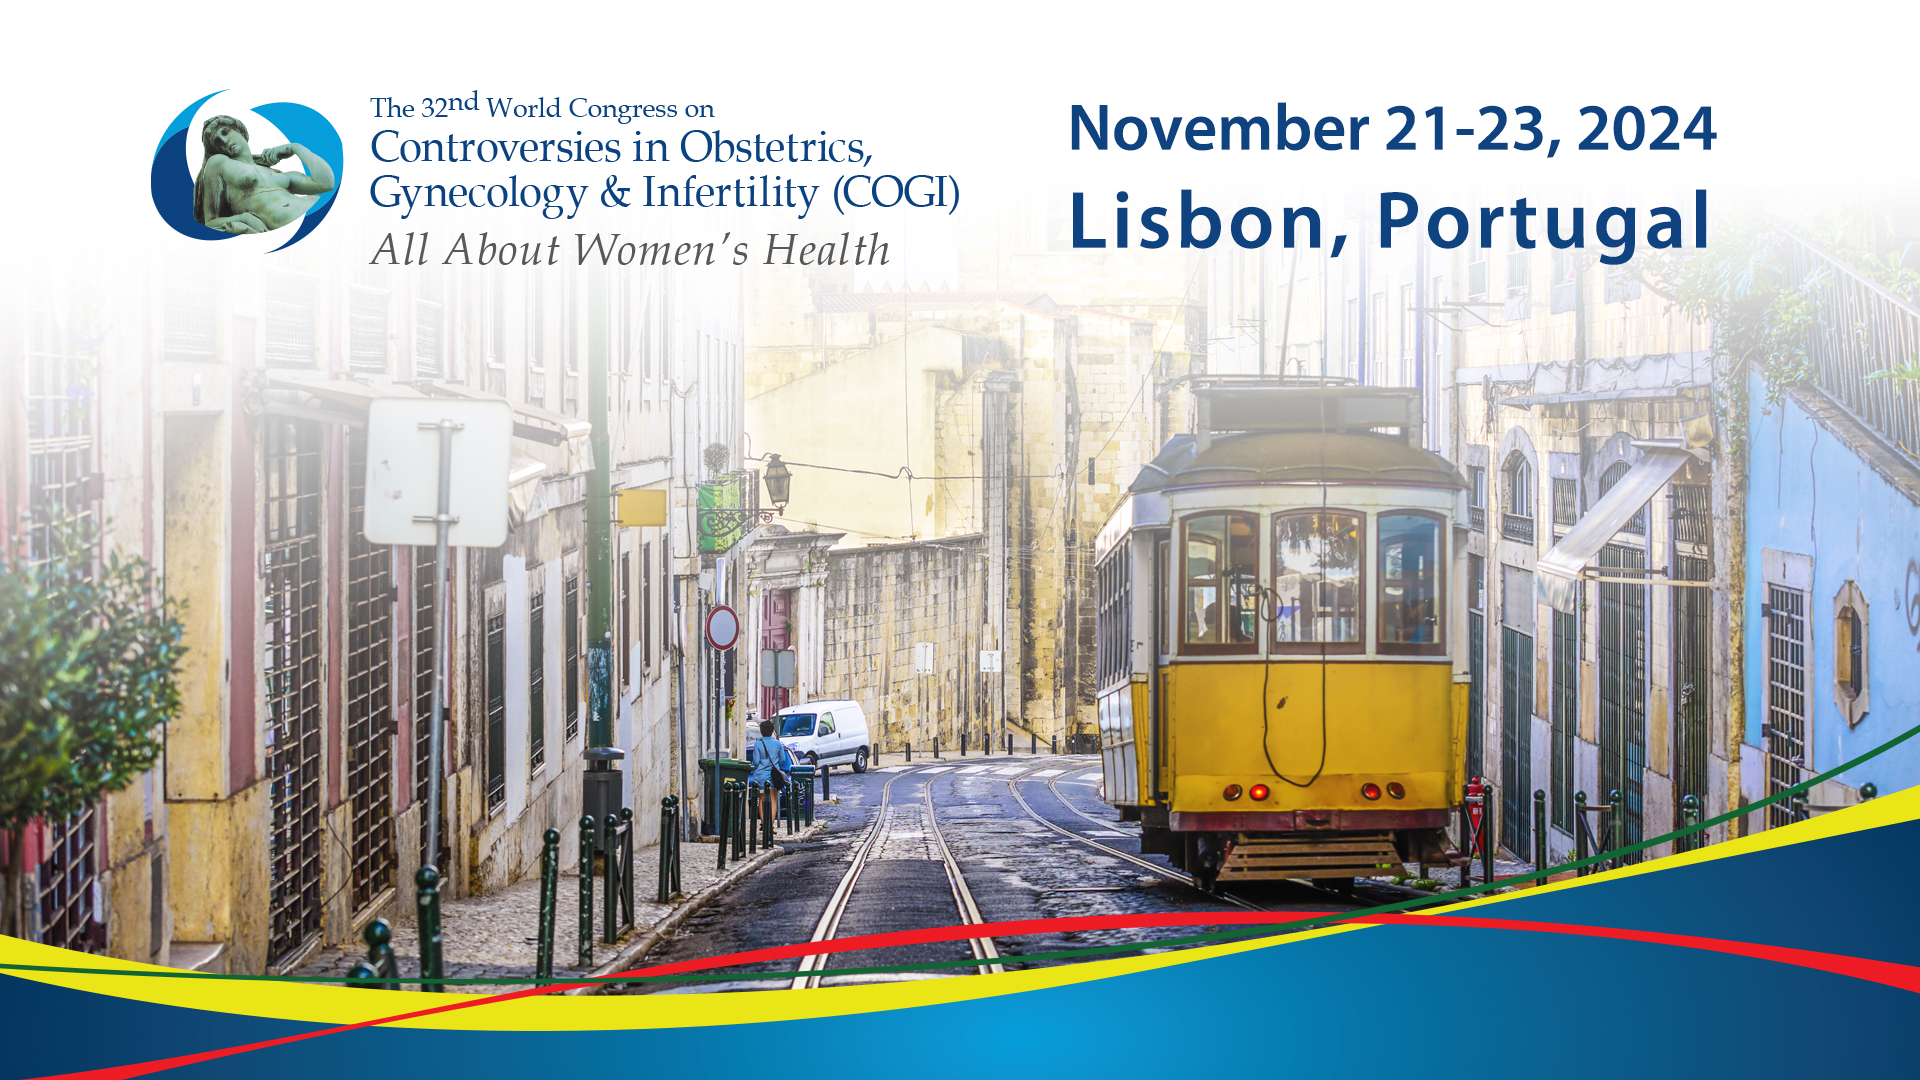 32nd World Congress on Controversies in Obstetrics, Gynecology & Infertility (COGI), Lisbon, Lisboa, Portugal